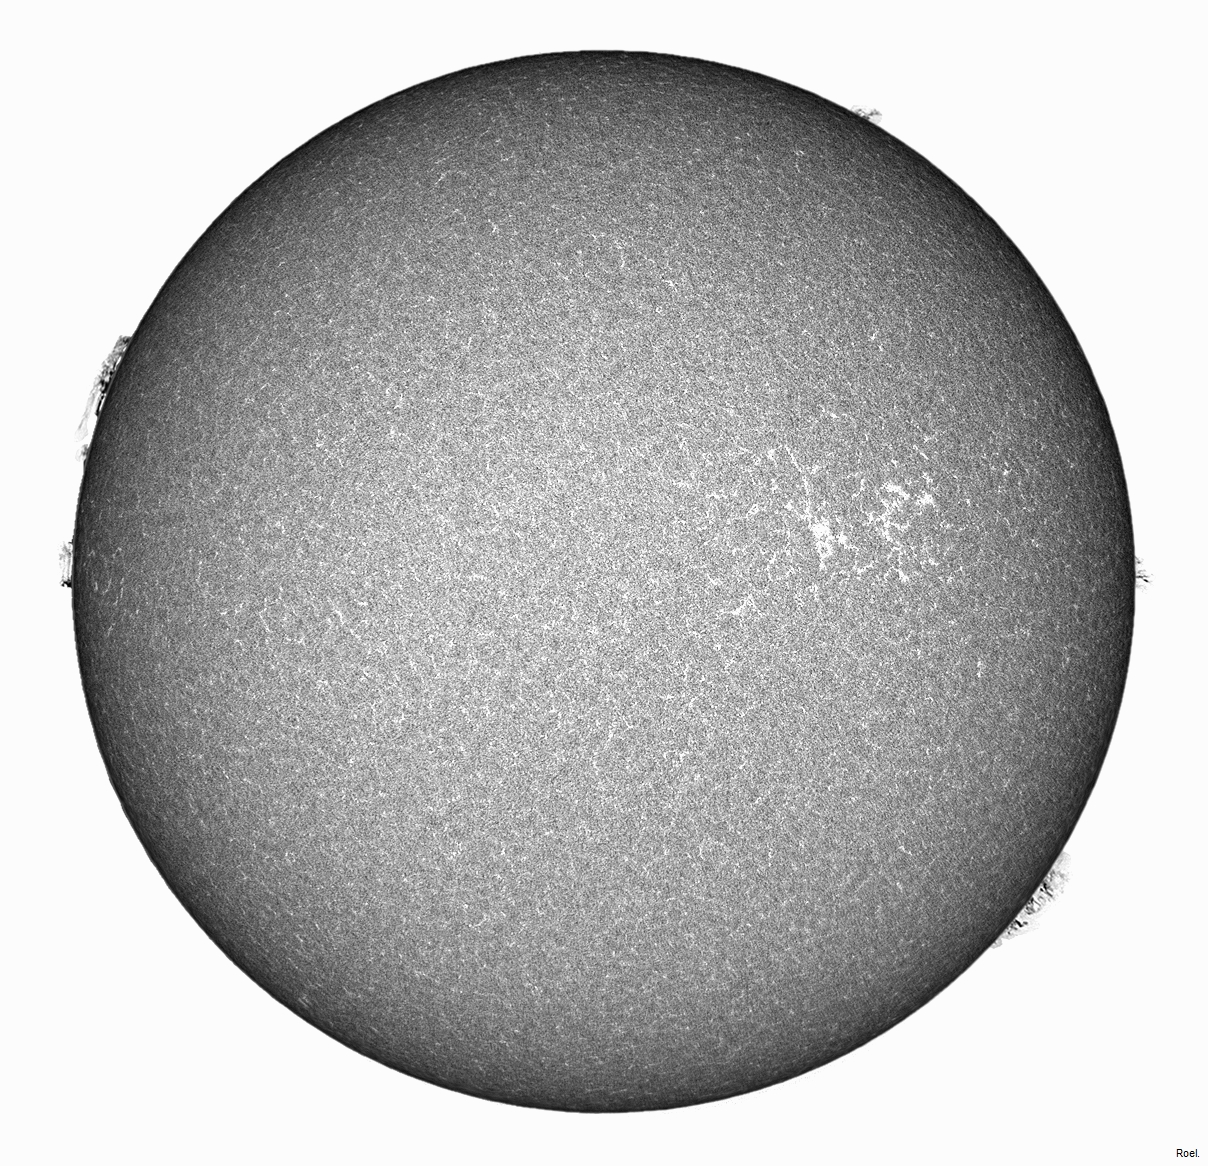 Sol del 12 de agosto del 2018-Meade-CaK-PSTmod-1neg.jpg